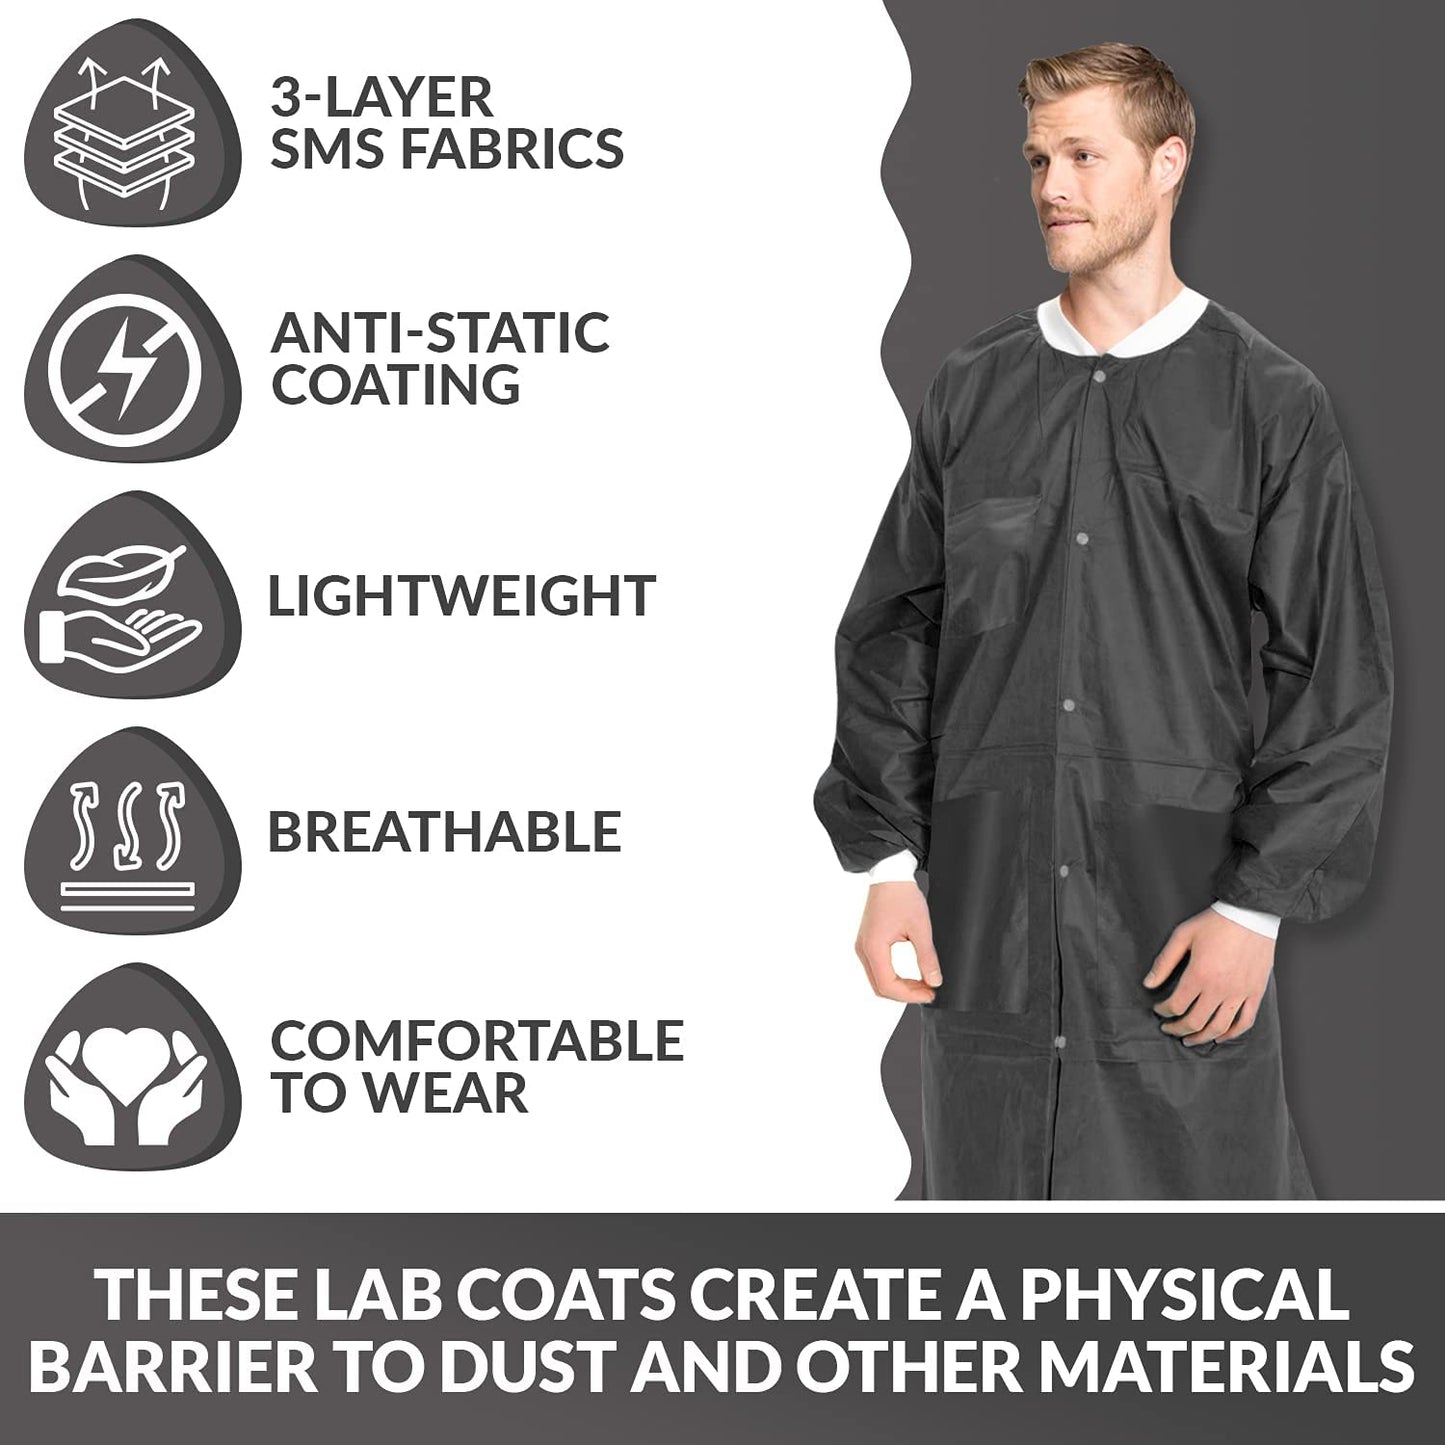 Lightweight Lab coats